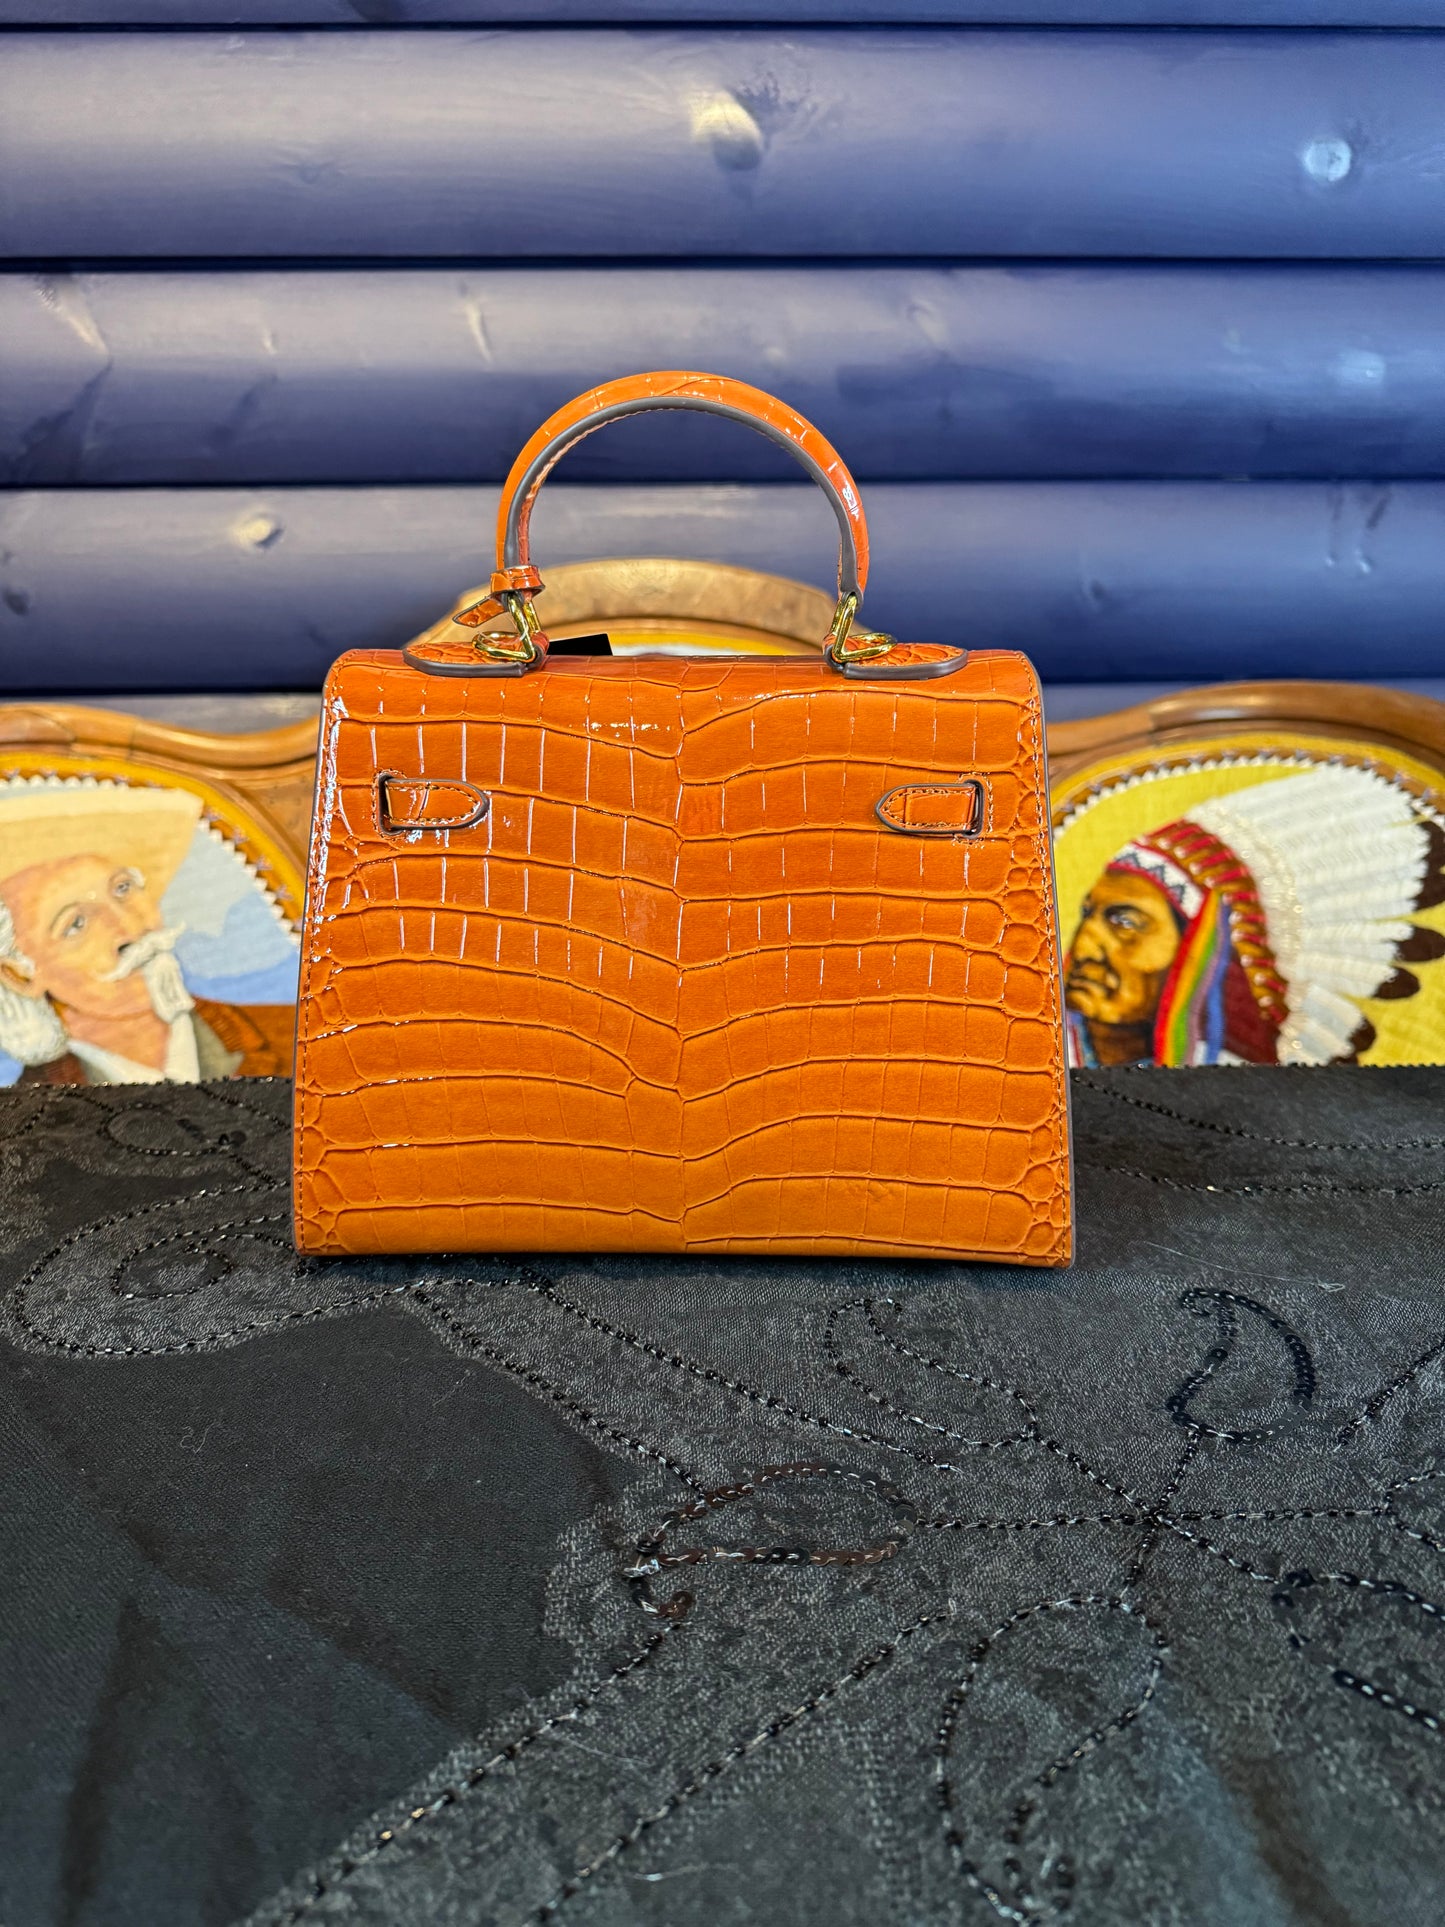 Orange Patent Leather Handbag